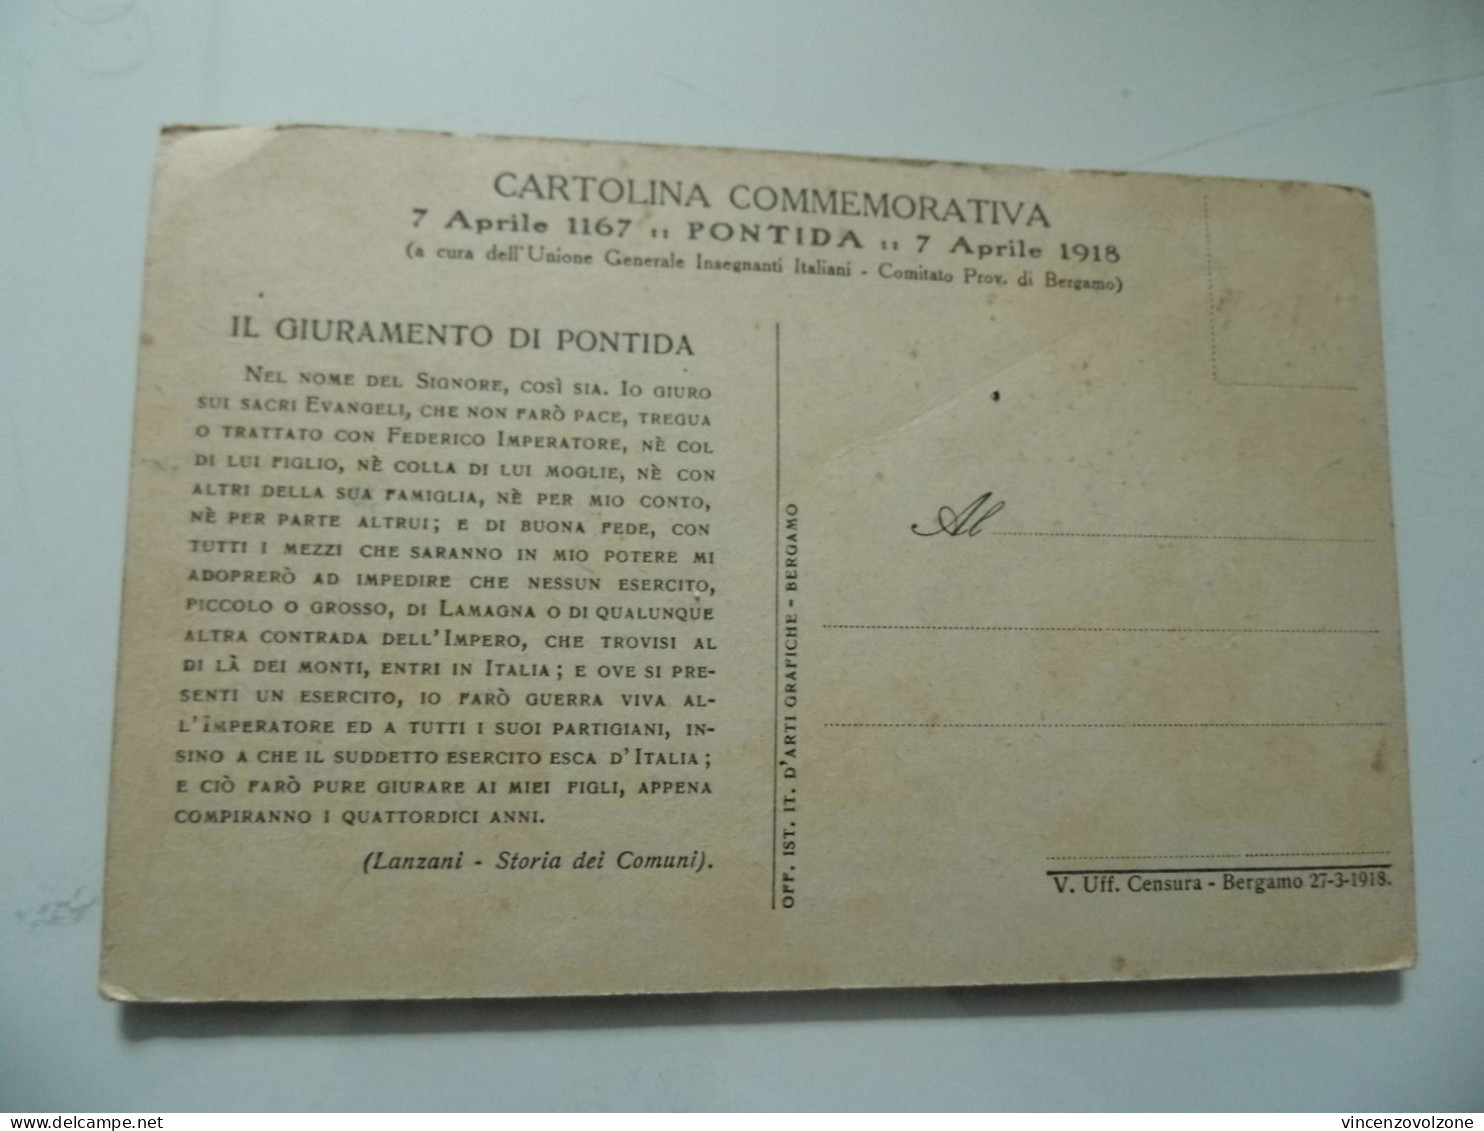 Cartolina "CARTOLINA COMMEMORATIVA GIURAMENTO DI PONTIDA" 1918 - Demonstrationen